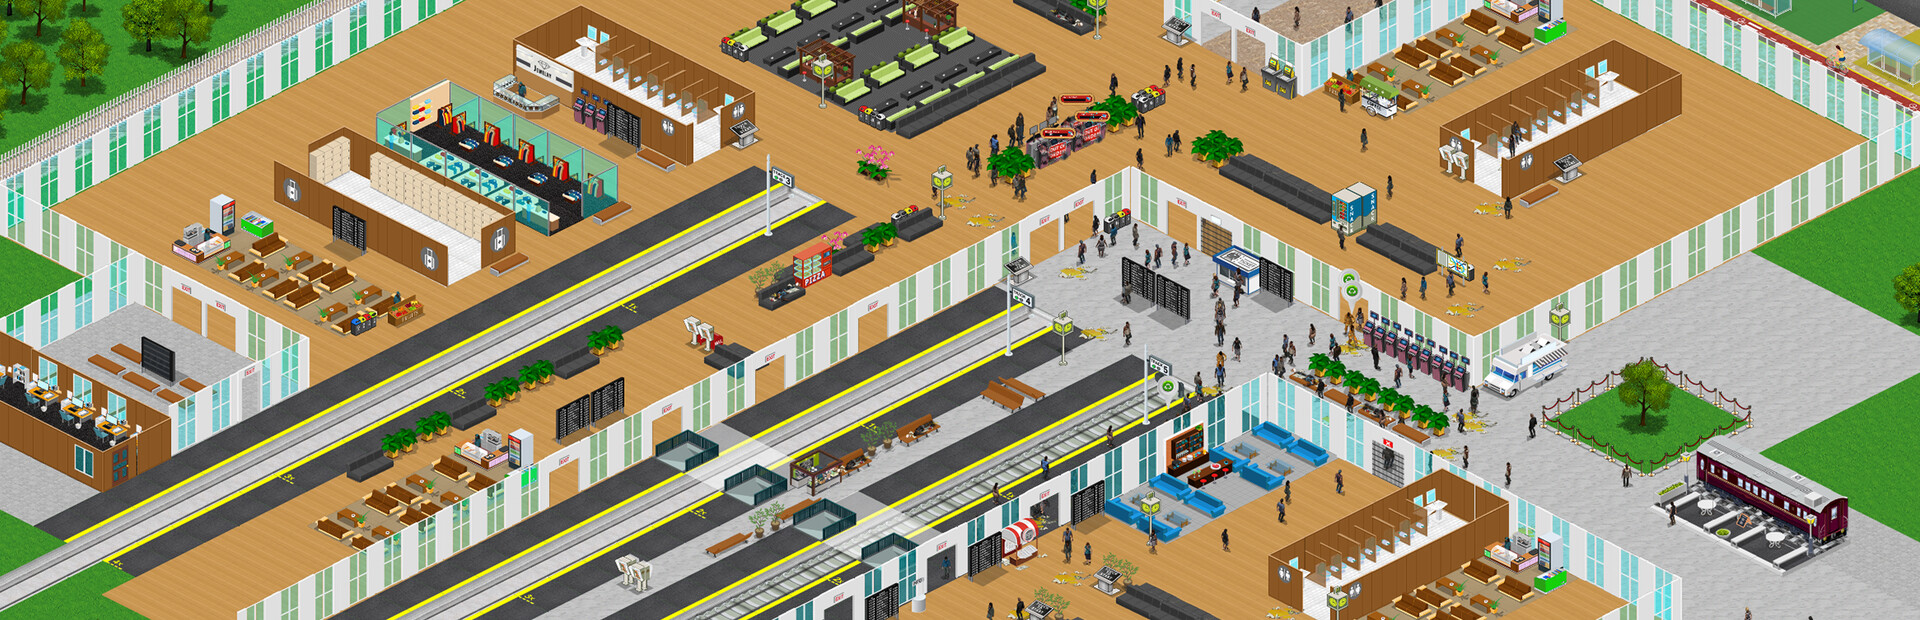 Train Station Simulator cover image